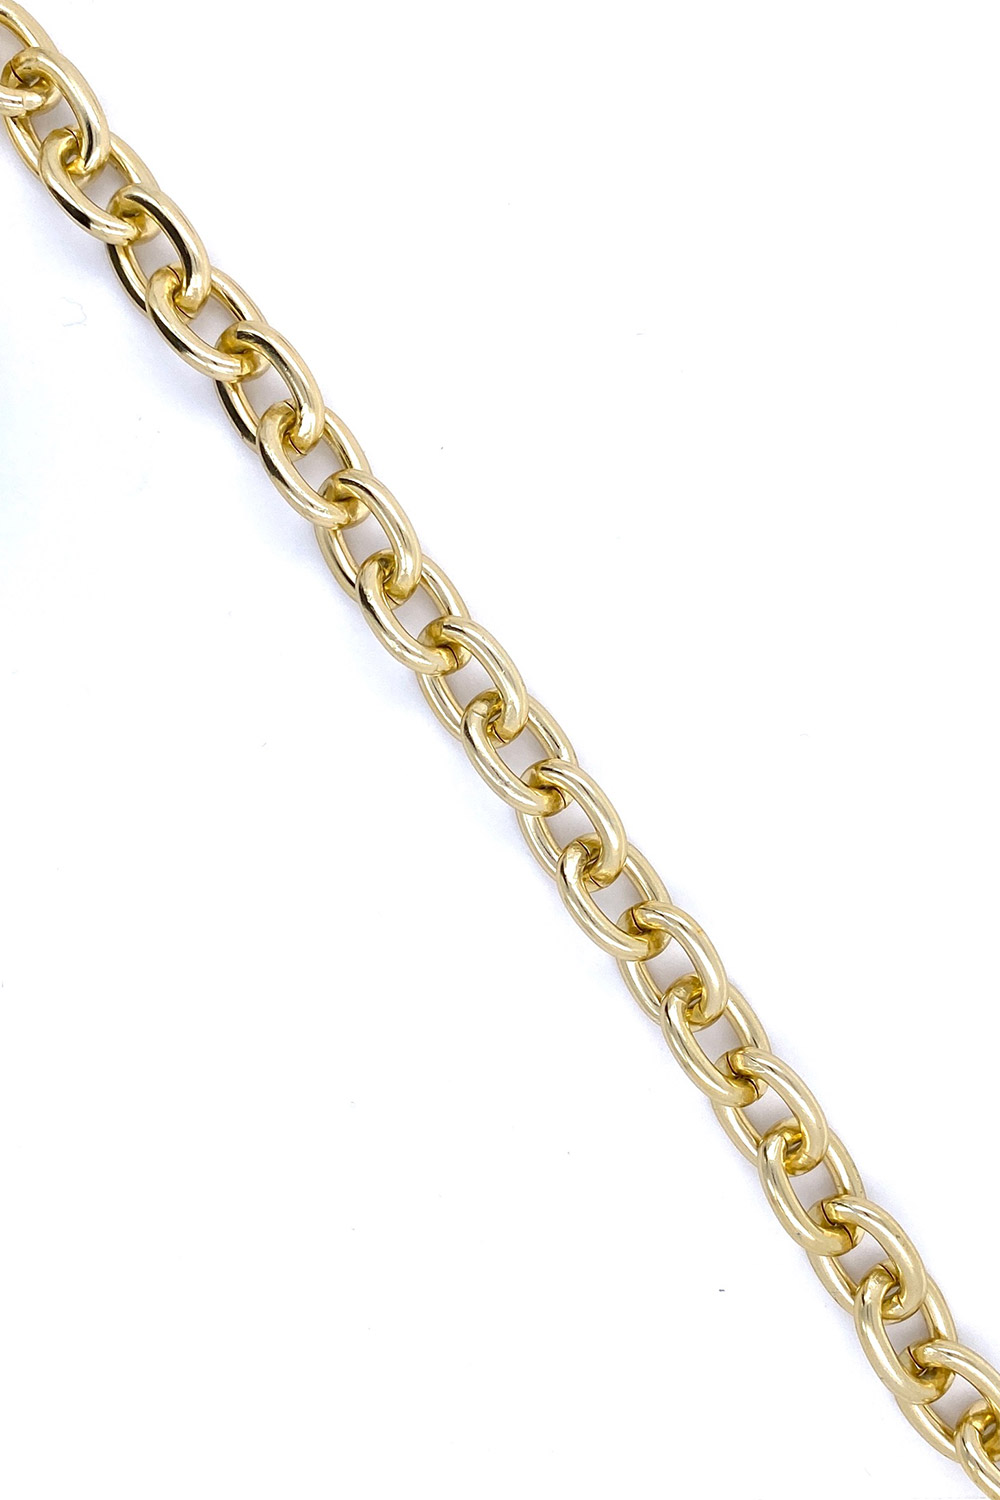 Gold Nickel Chain – thin 120cm